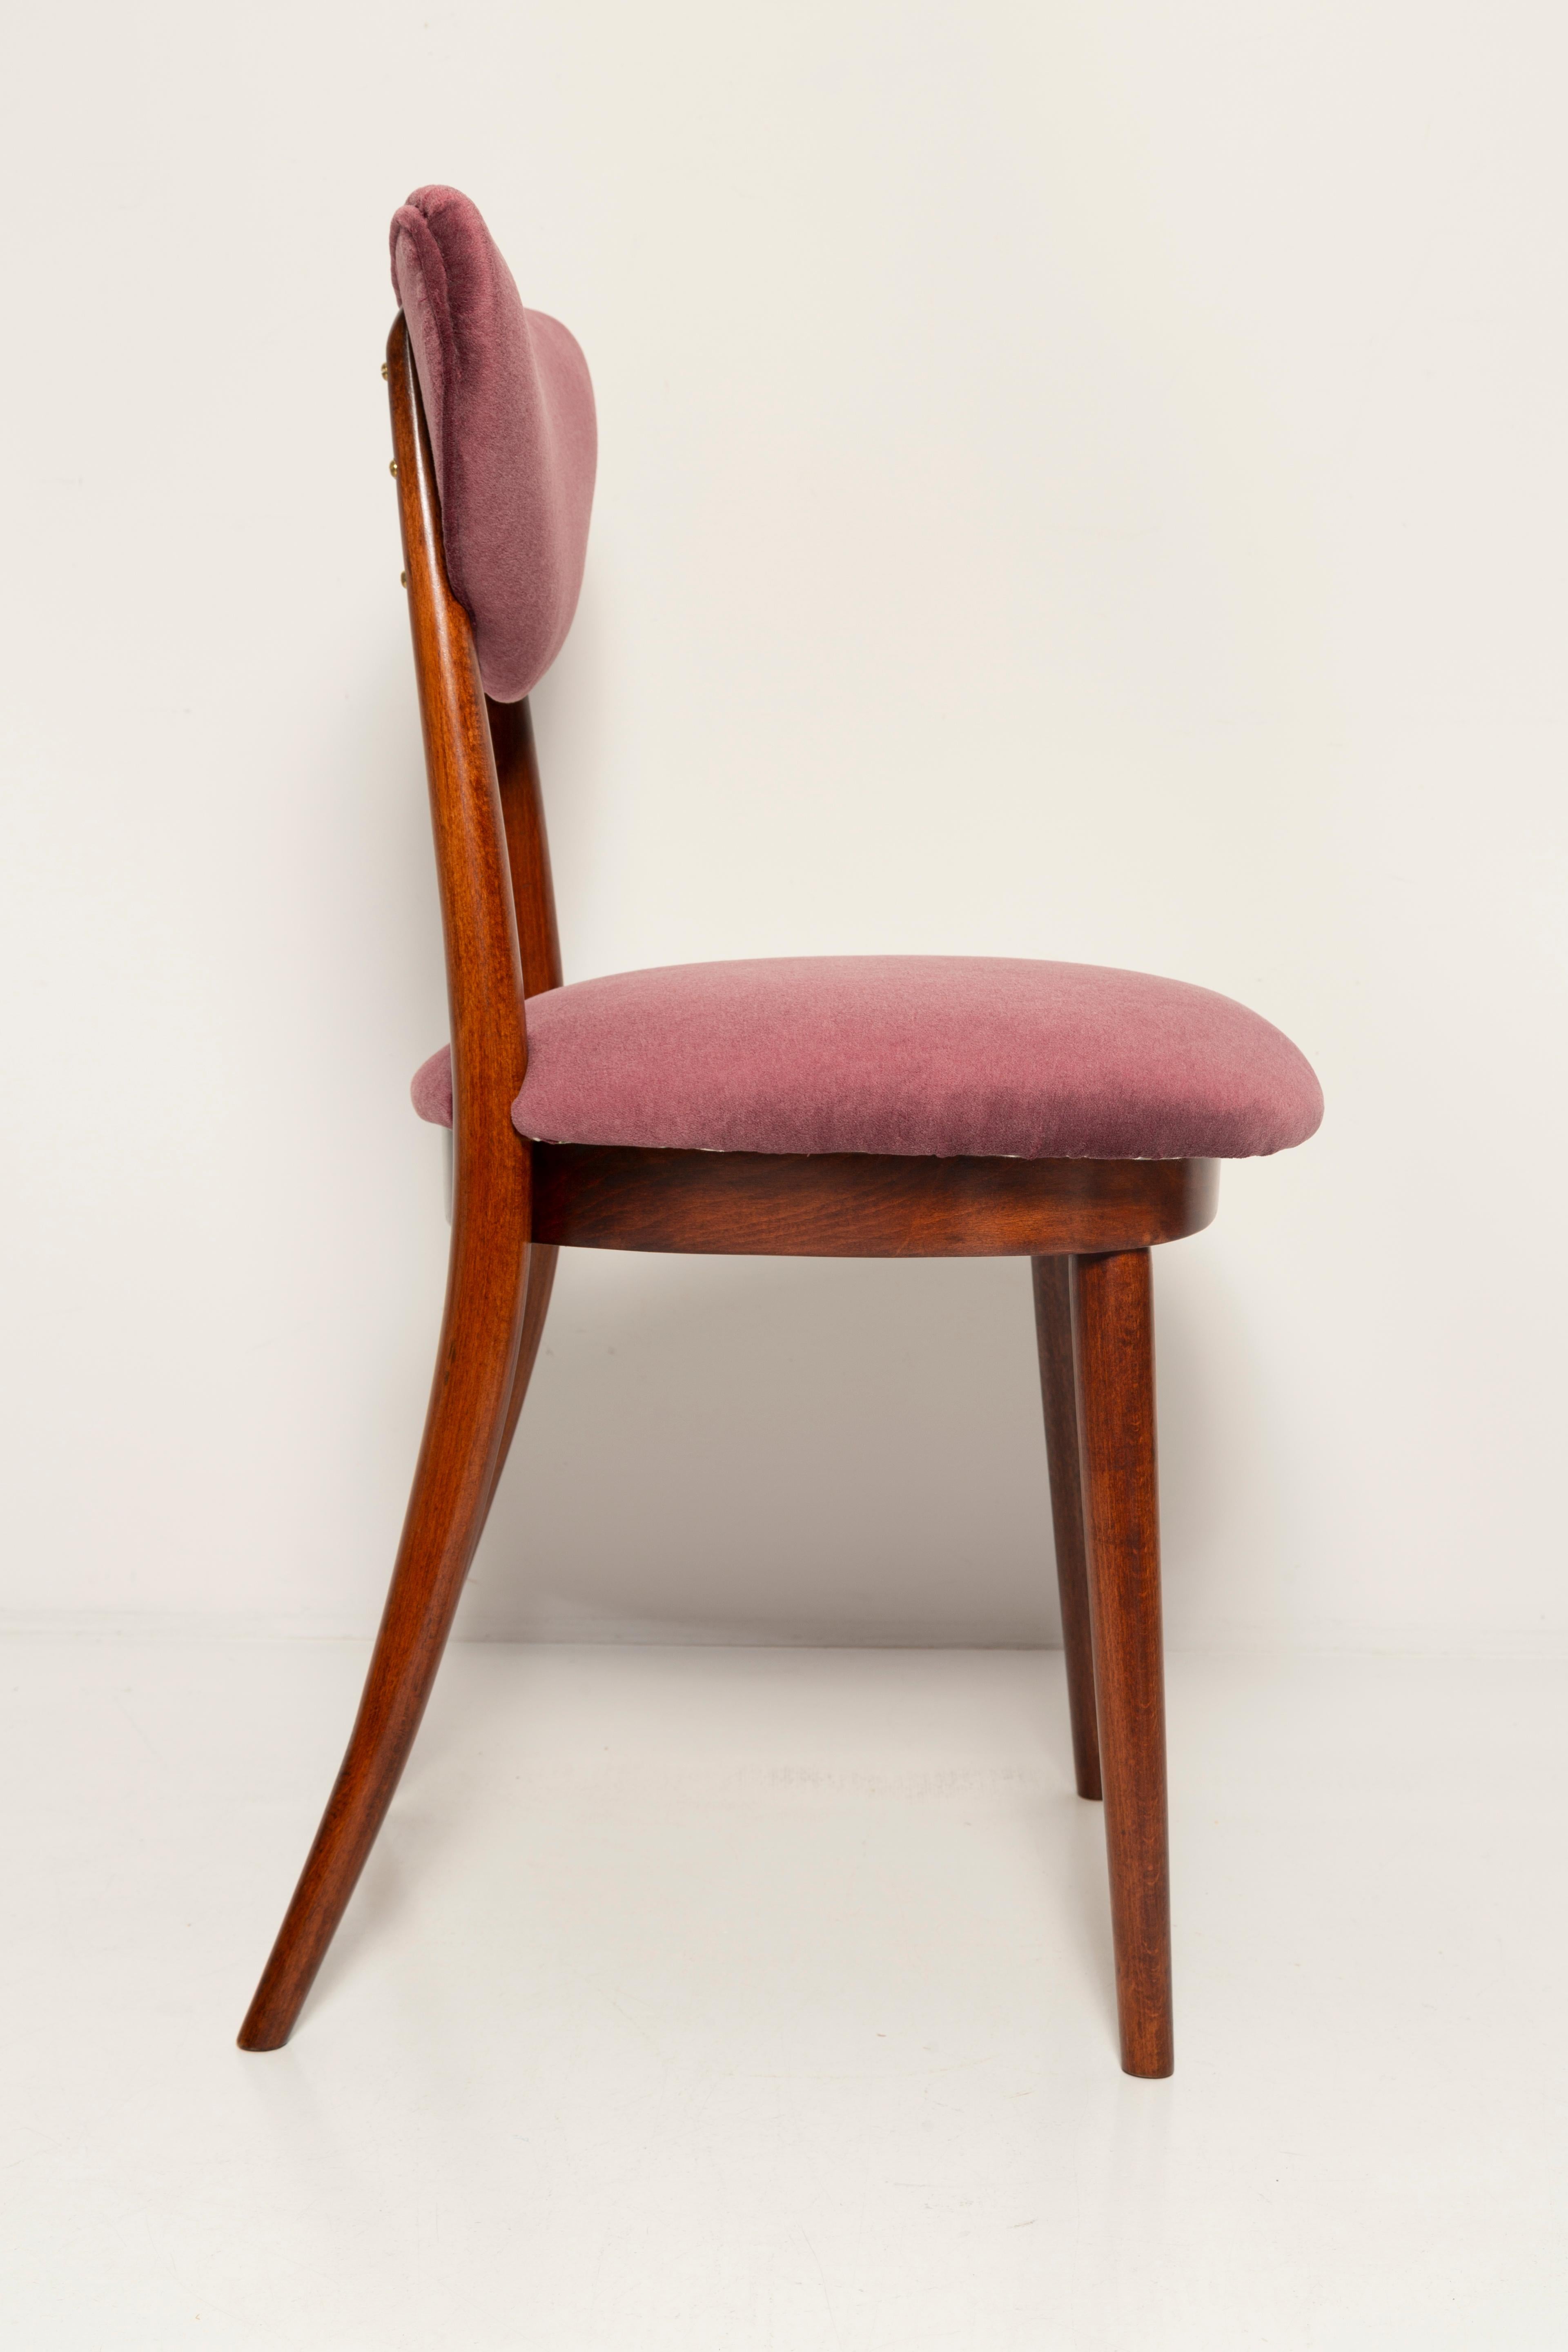 Set of Eight Midcentury Plum Violet Velvet Heart Chairs, Europe, 1960s For Sale 3